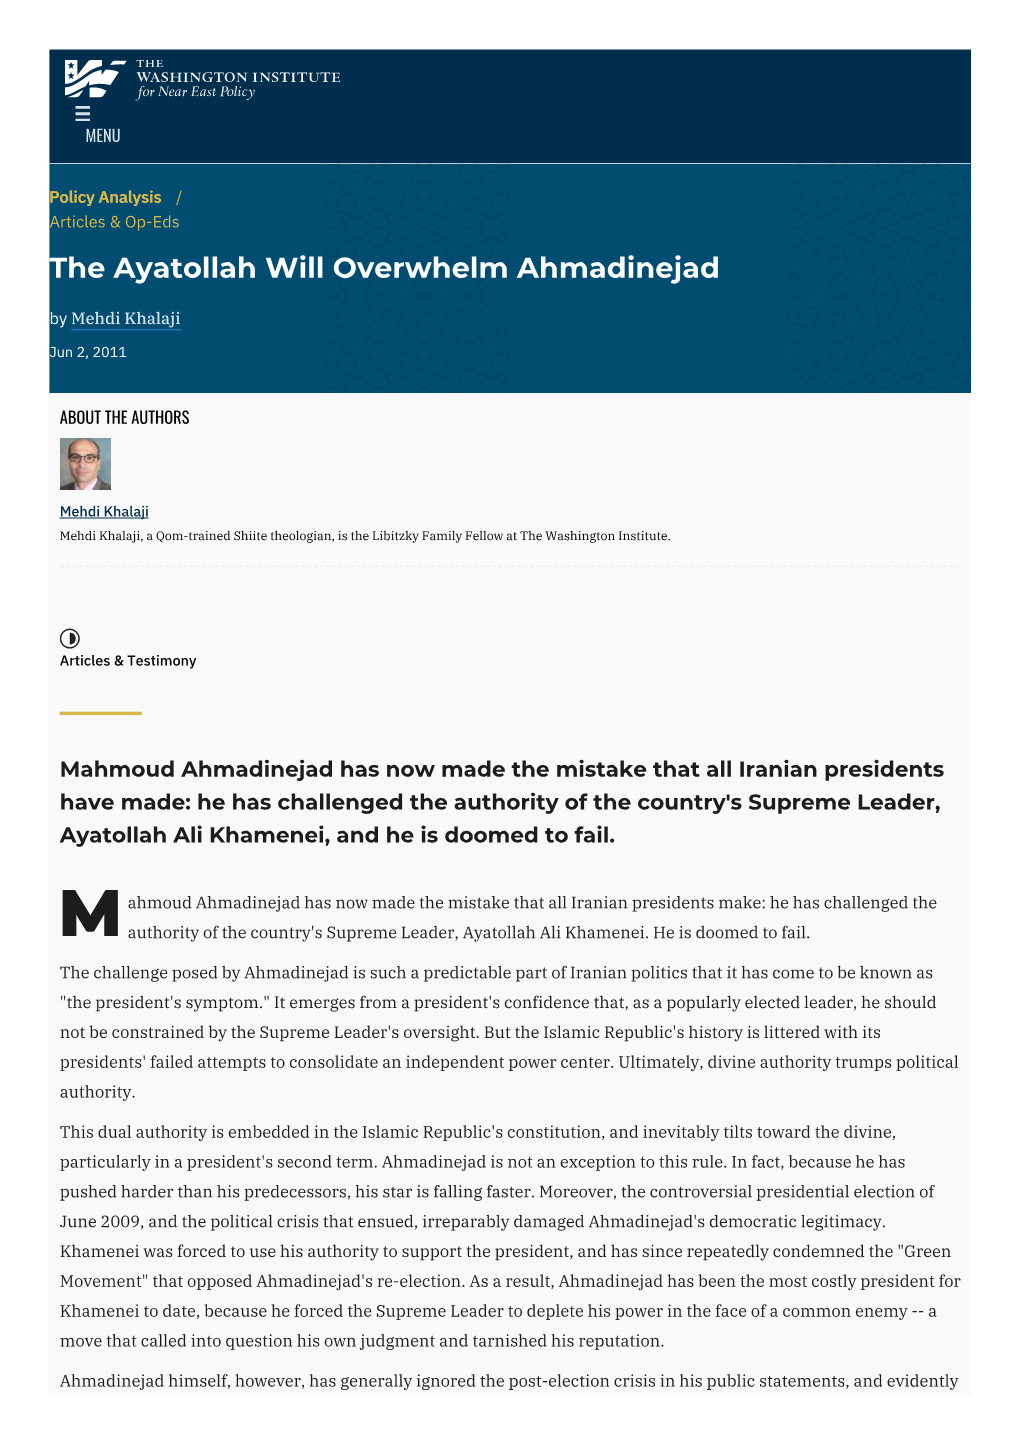 The Ayatollah Will Overwhelm Ahmadinejad | the Washington Institute